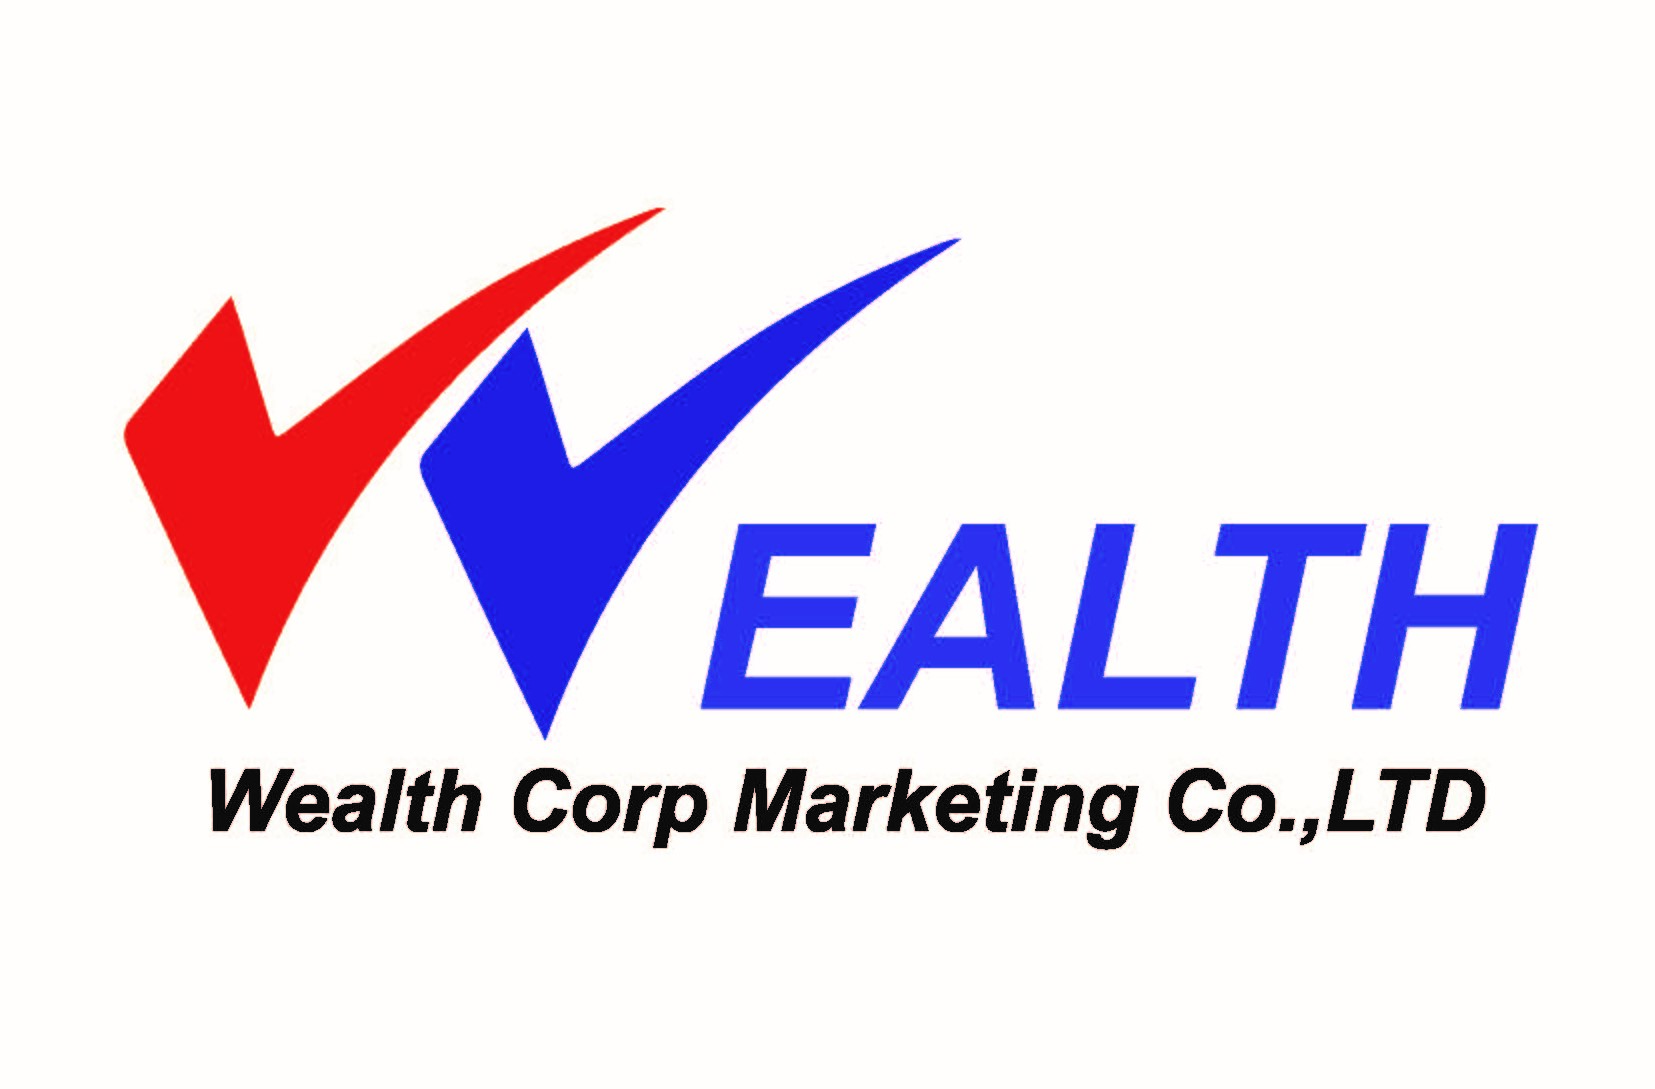 Wealth Corp Marketing Co.,LTD